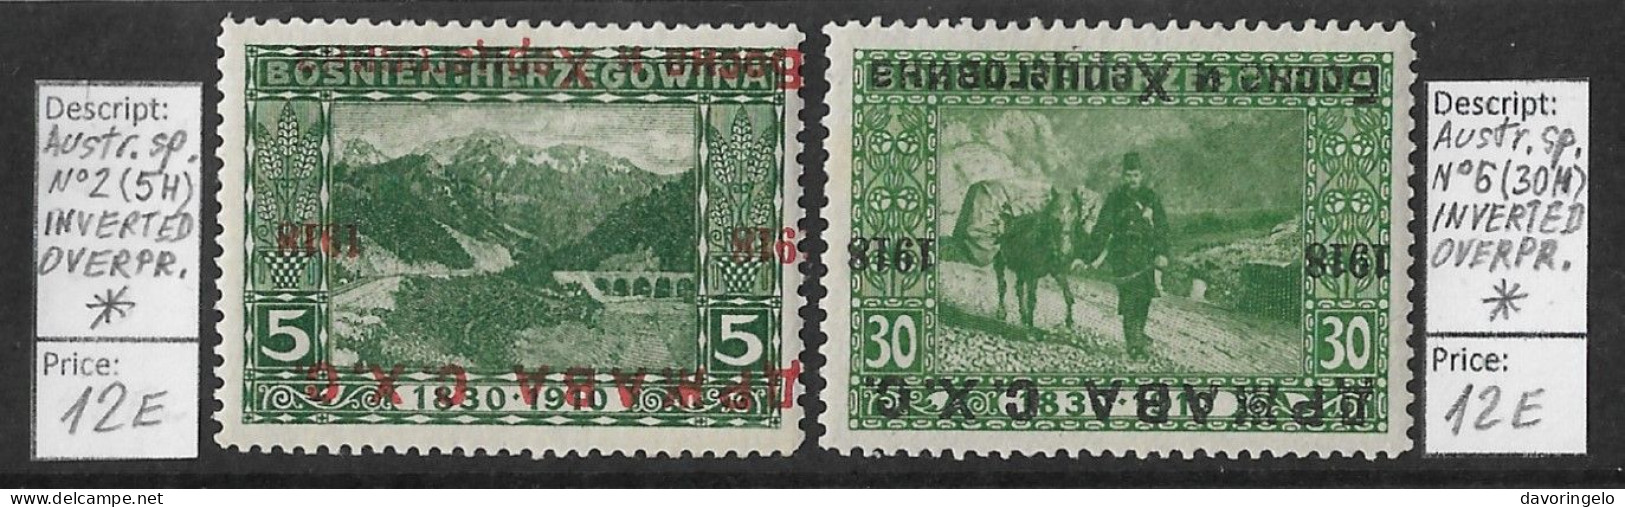 Bosnia-Herzegovina/Yugoslavia/SHS, 1918 Year, Austr. Sp. No 2 (5H) & No 6 (30H), INVERTED OVERPRINT, (*) - Bosnië En Herzegovina